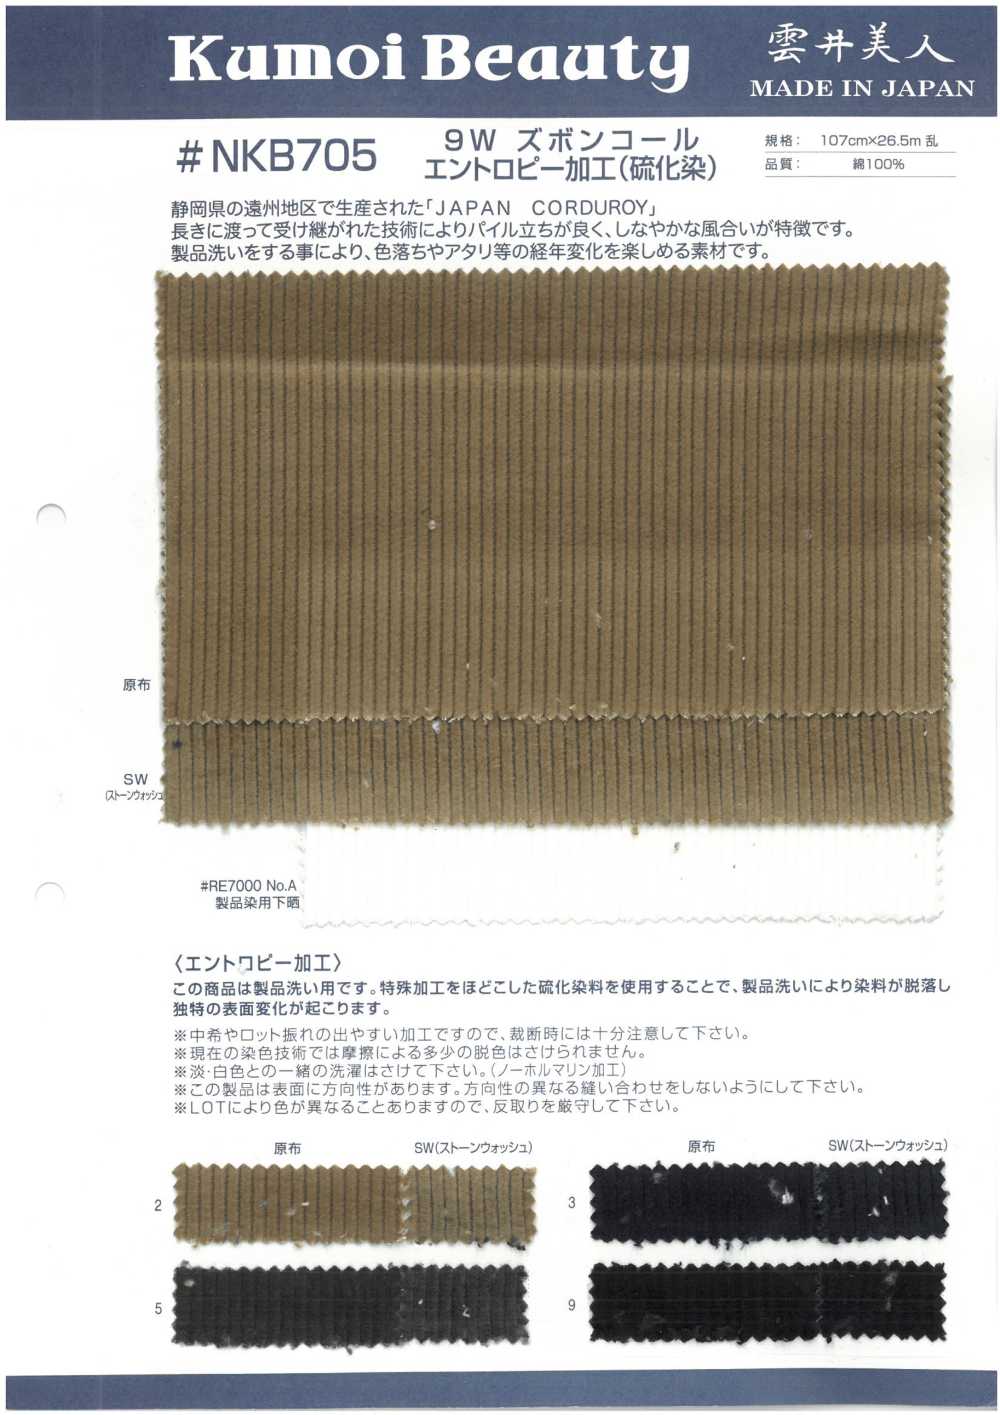 NKB705 9W Trousers Corduroy Entropy Processing (Sulfide Dyeing)[Textile / Fabric] Kumoi Beauty (Chubu Velveteen Corduroy)